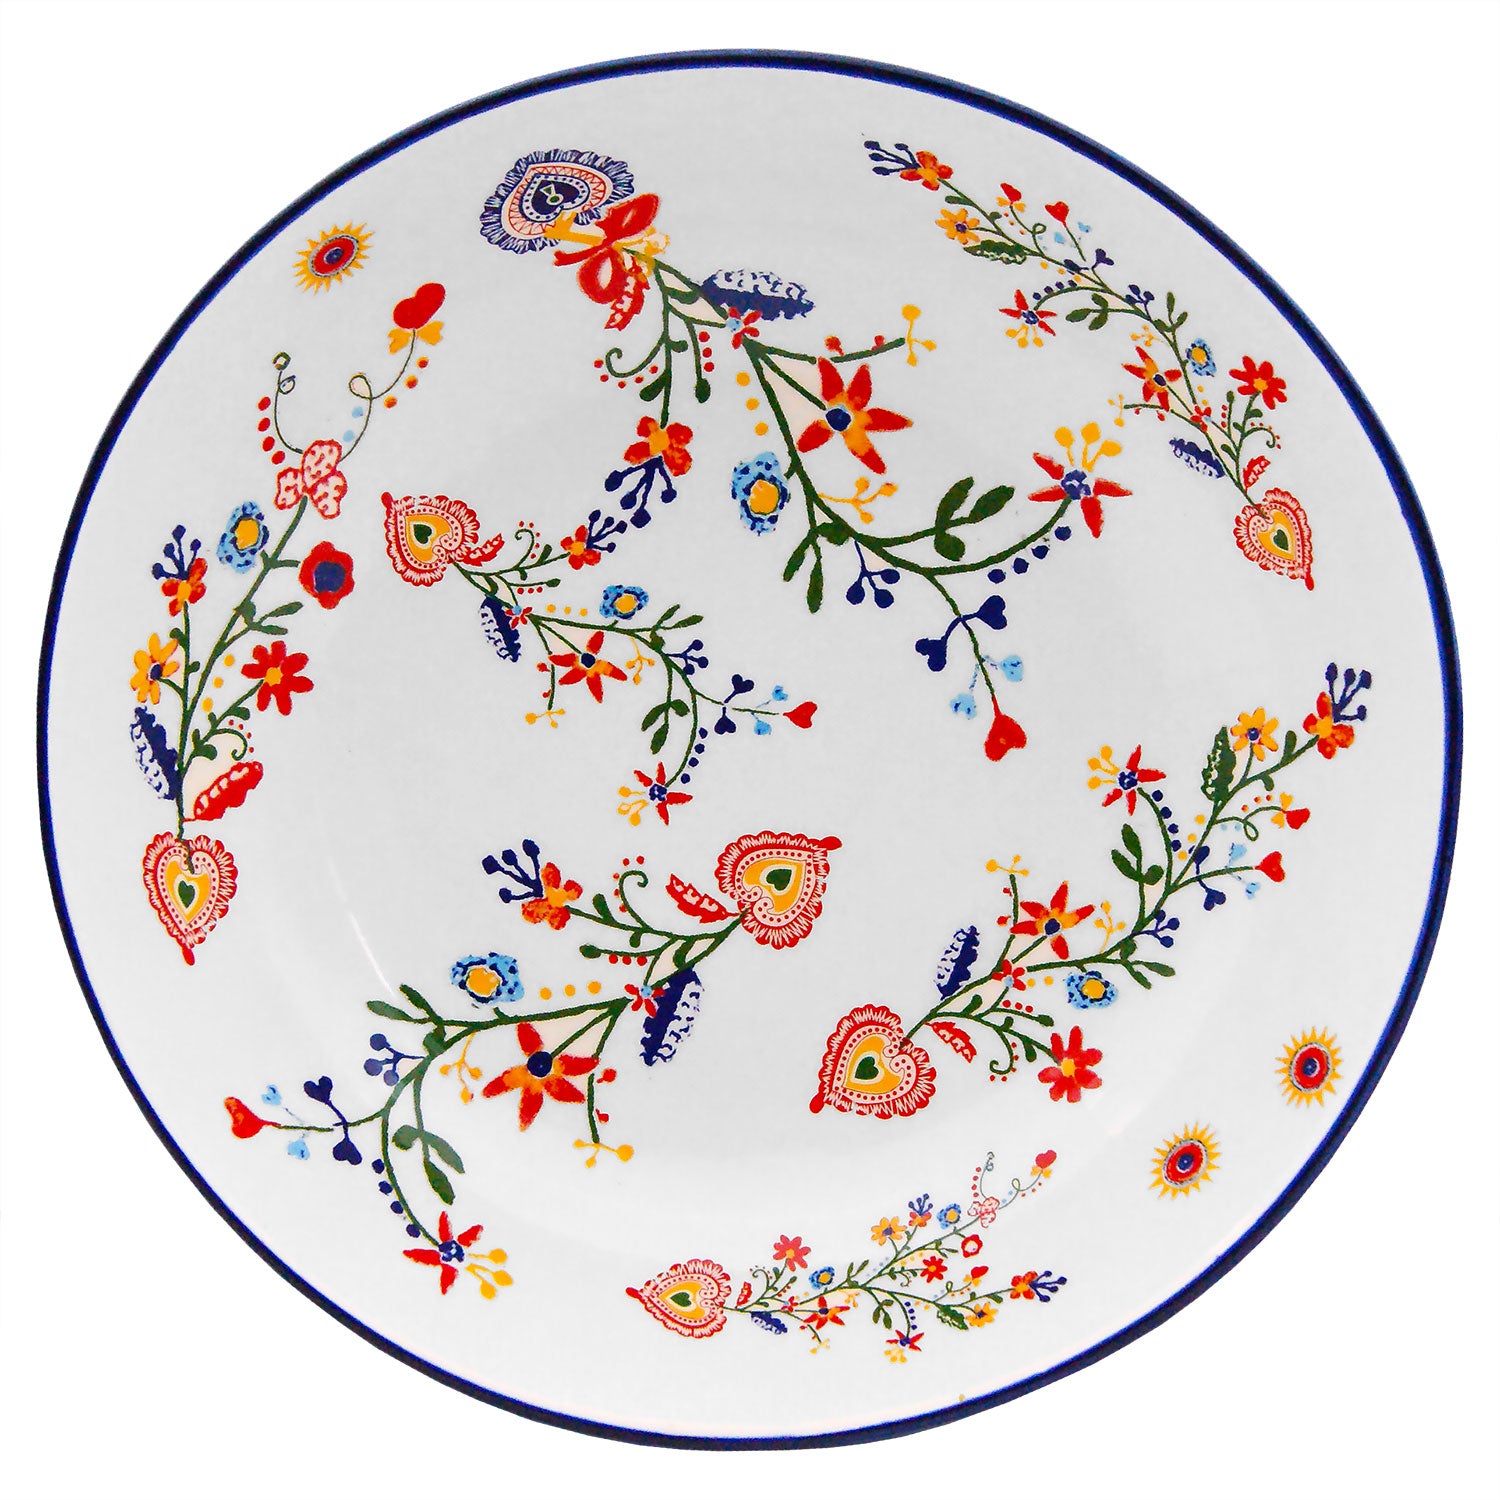 Portuguese Pottery Alcobaça Ceramic Decorative Salad Serving Bowl